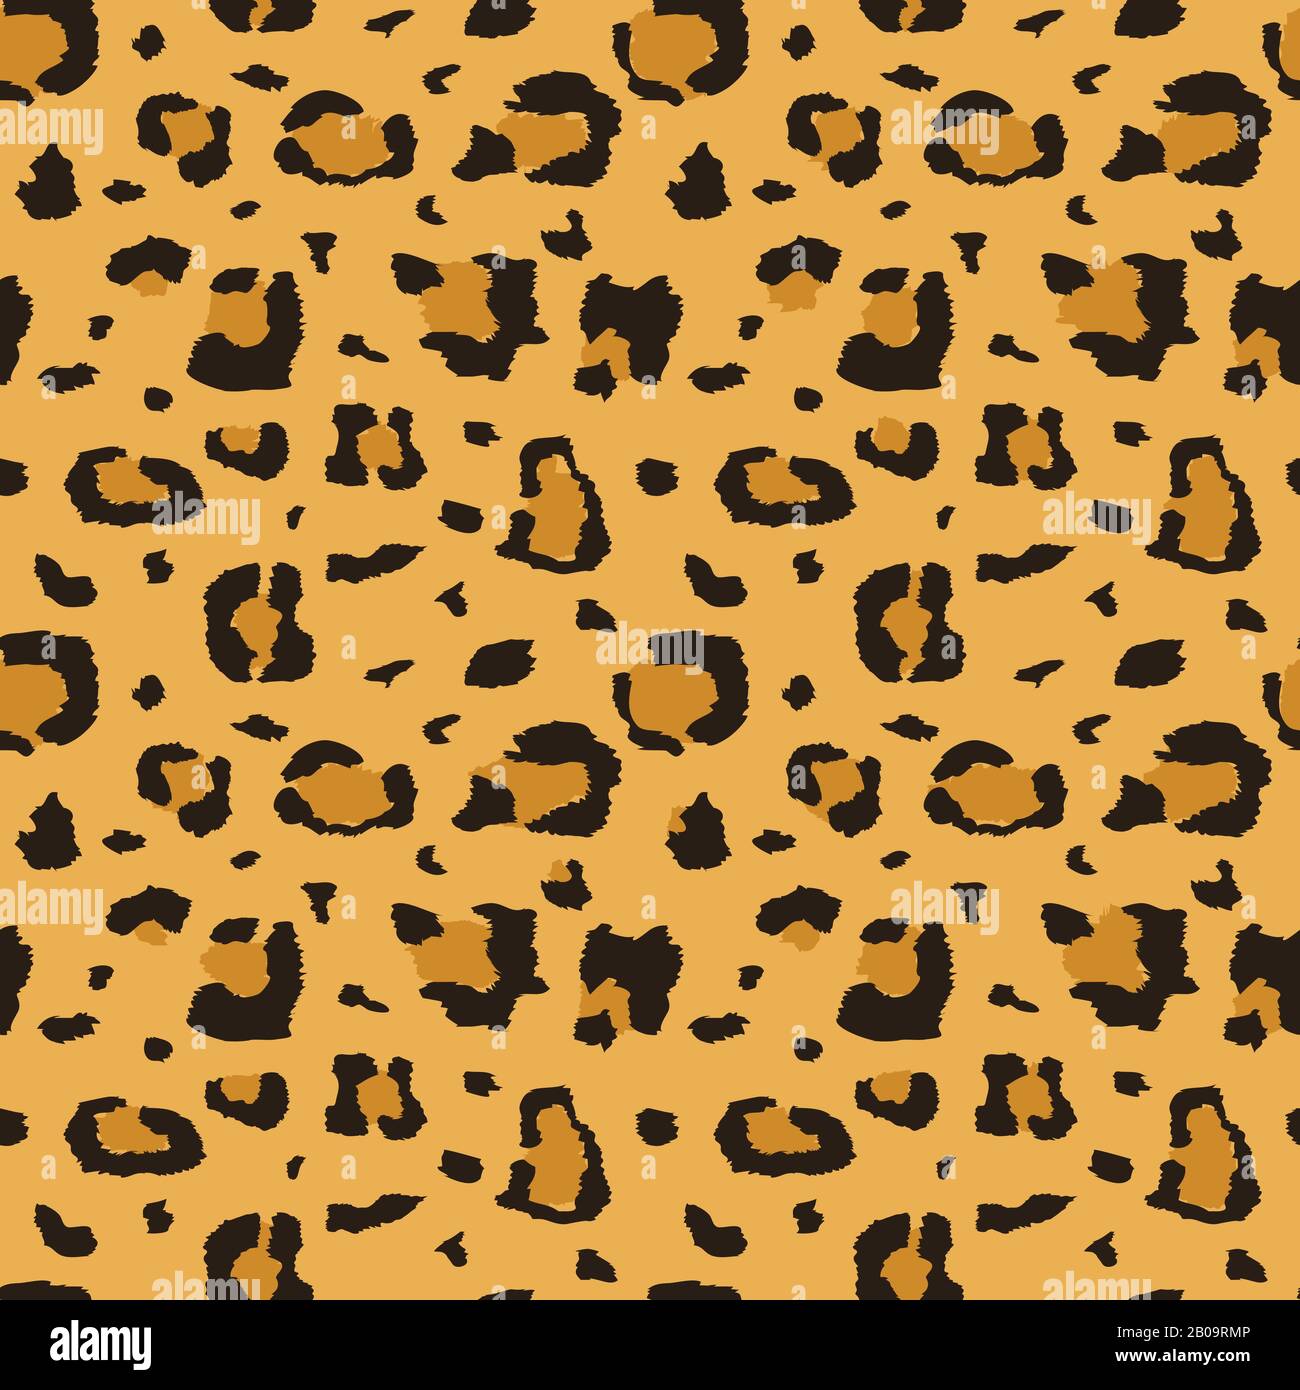 Afrikanischer Gepard, Leopardenfell Vektor nahtlose Textur, Stoffmuster. Wilde afrikanische Tiere Haut, Illustration des Leopardenmusters Stock Vektor